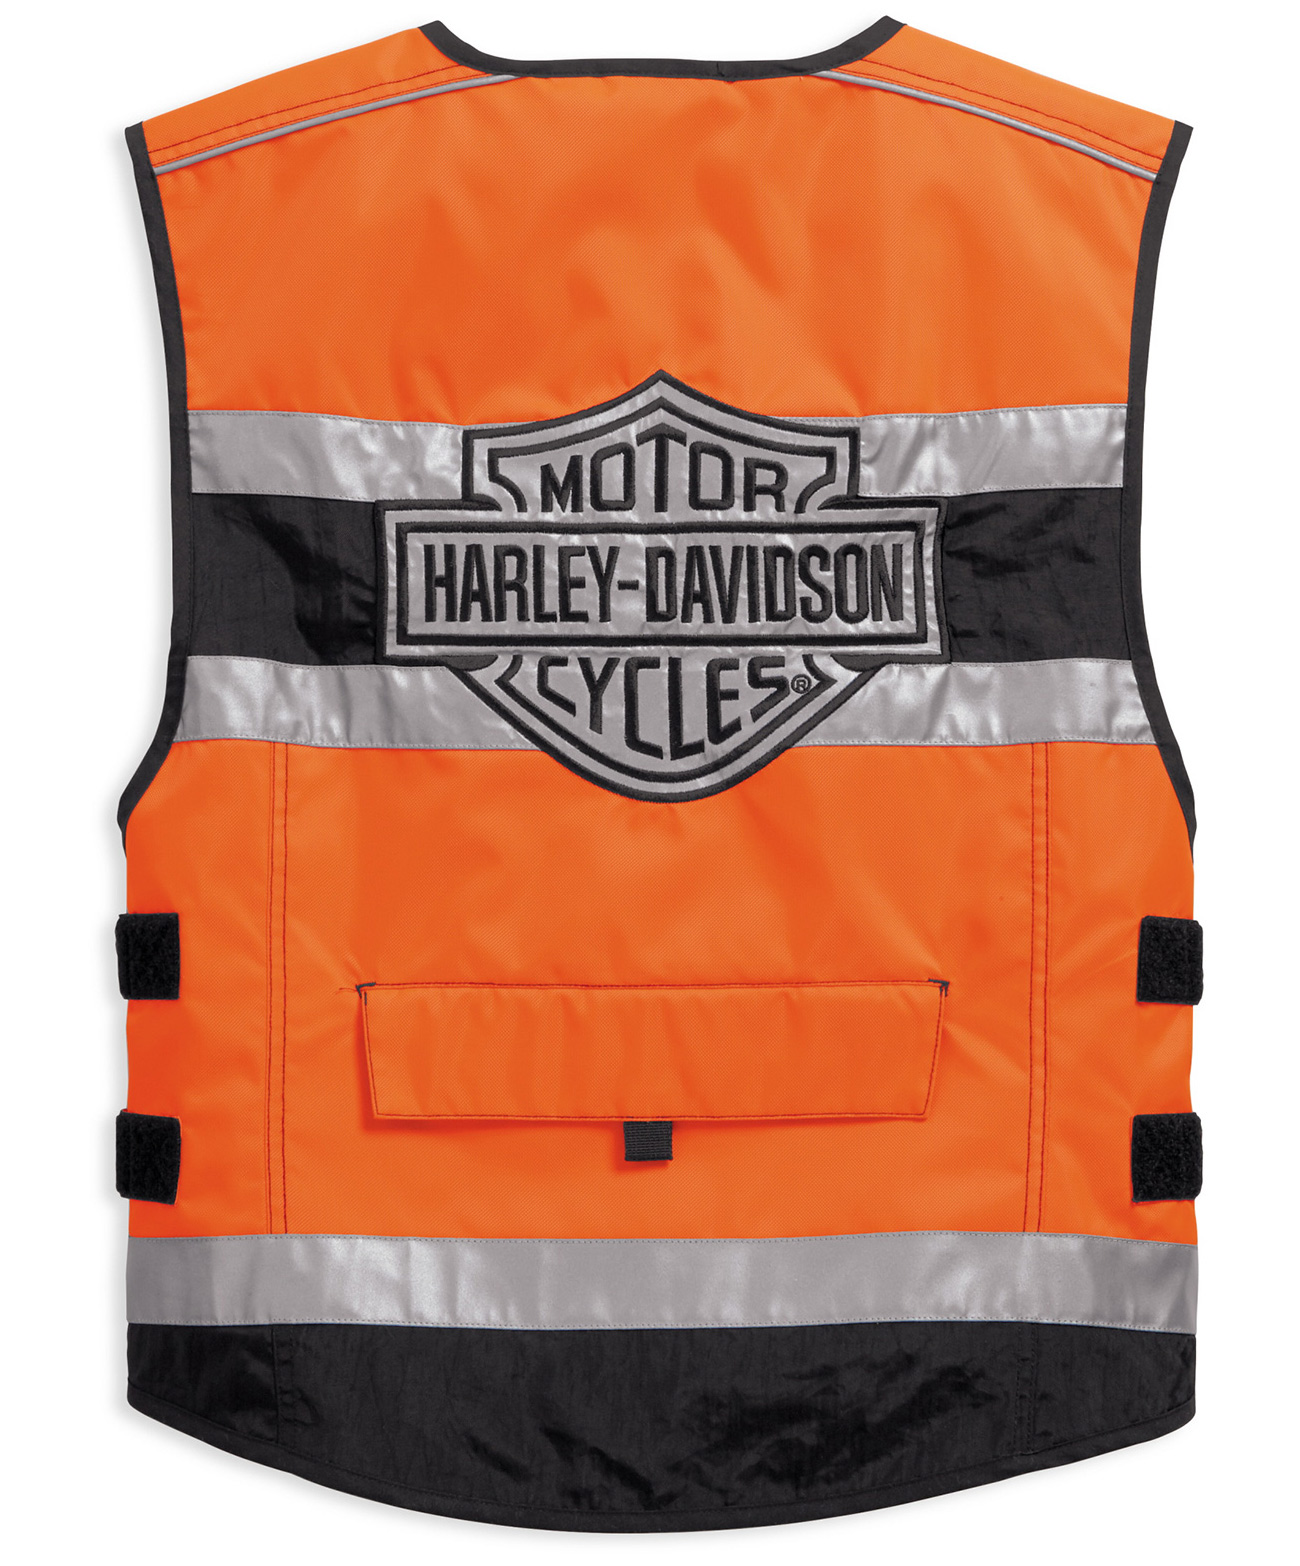 98157 18em Harley Davidson Vest Hi Visibility Reflective Orange At Thunderbike Shop